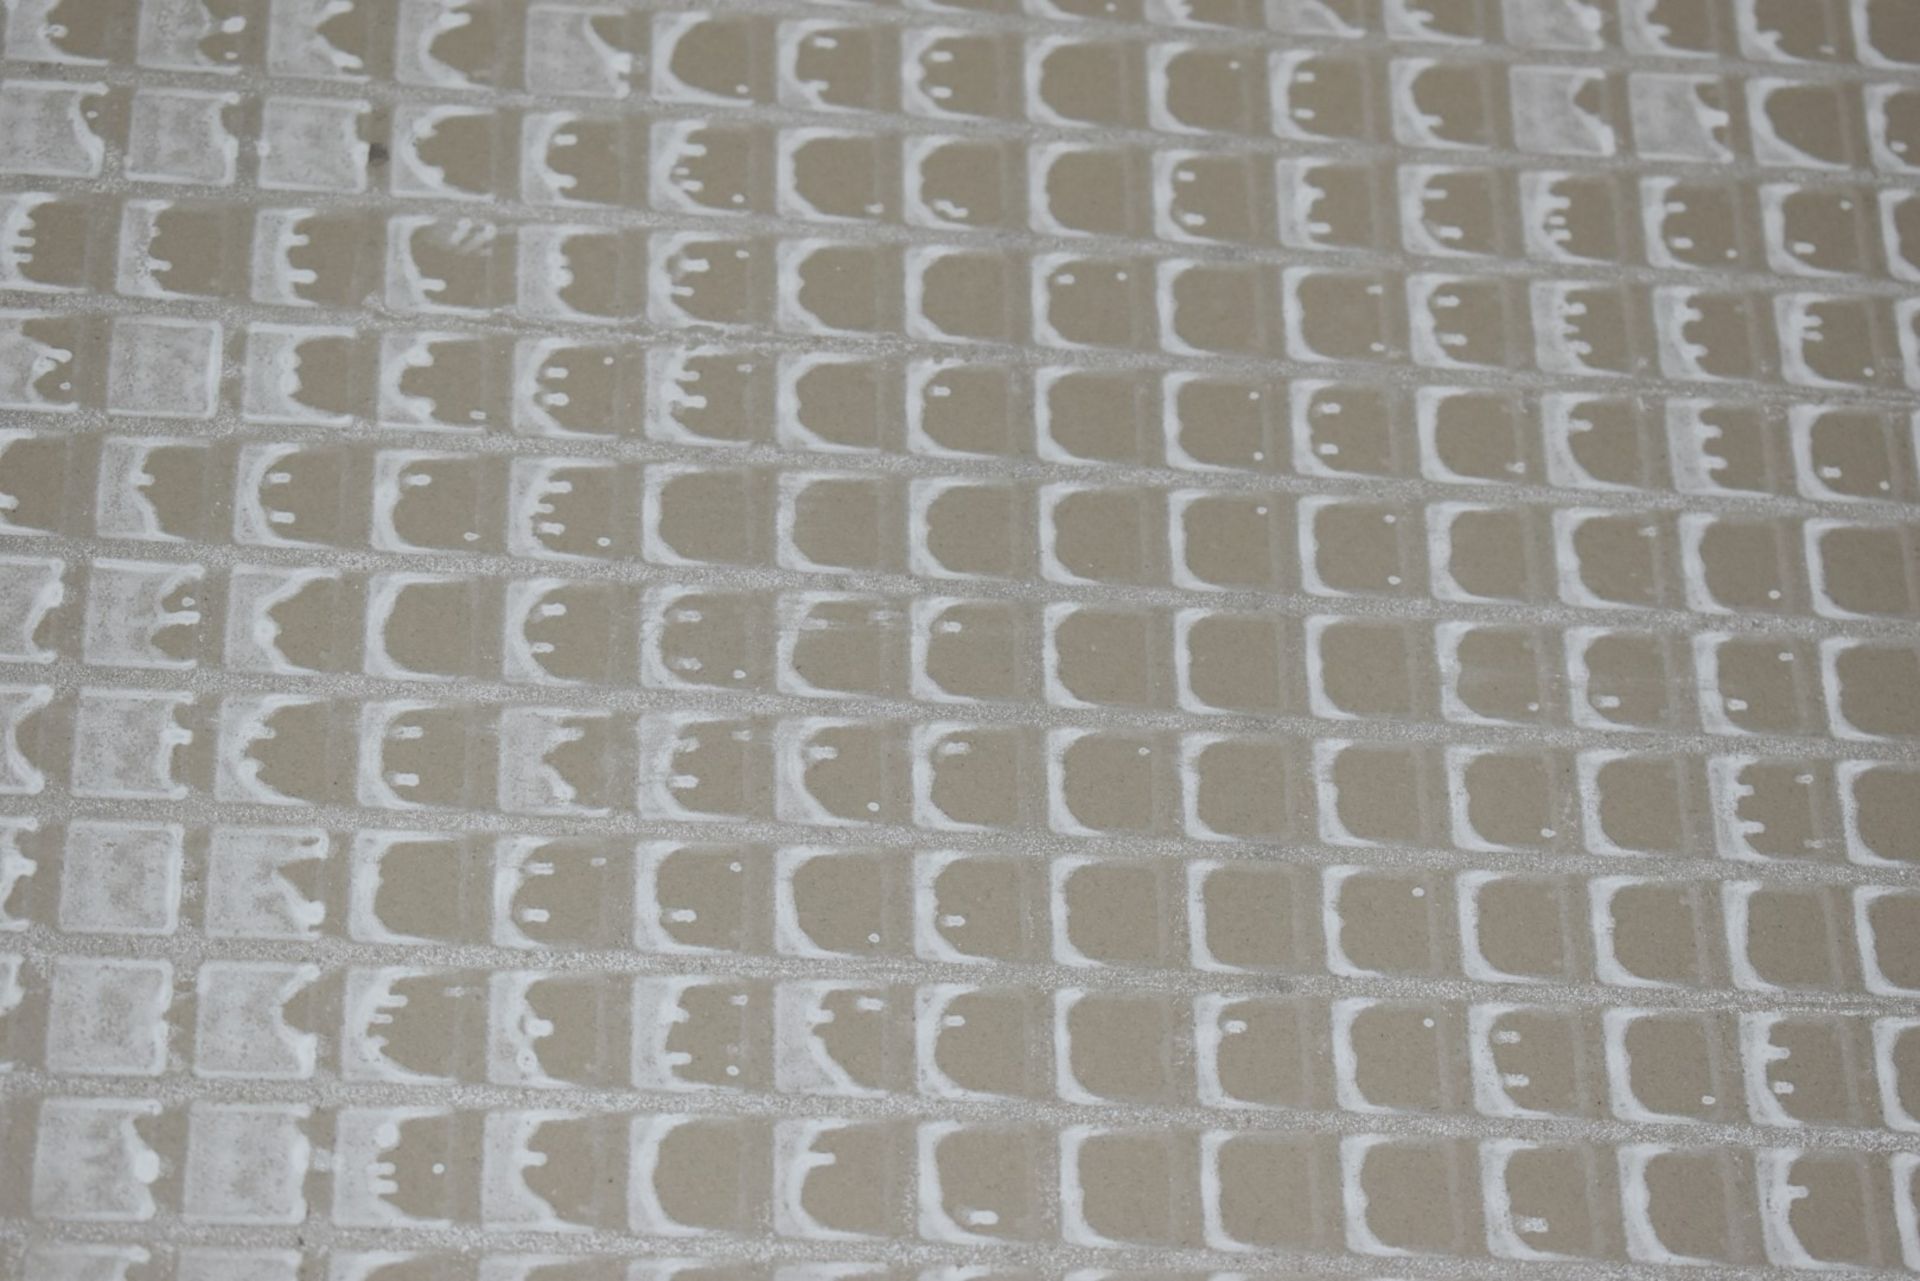 6 x Boxes of RAK Porcelain Floor or Wall Tiles - Concrete Sand Design Design in Beige - 30 x 60 cm - Image 8 of 8